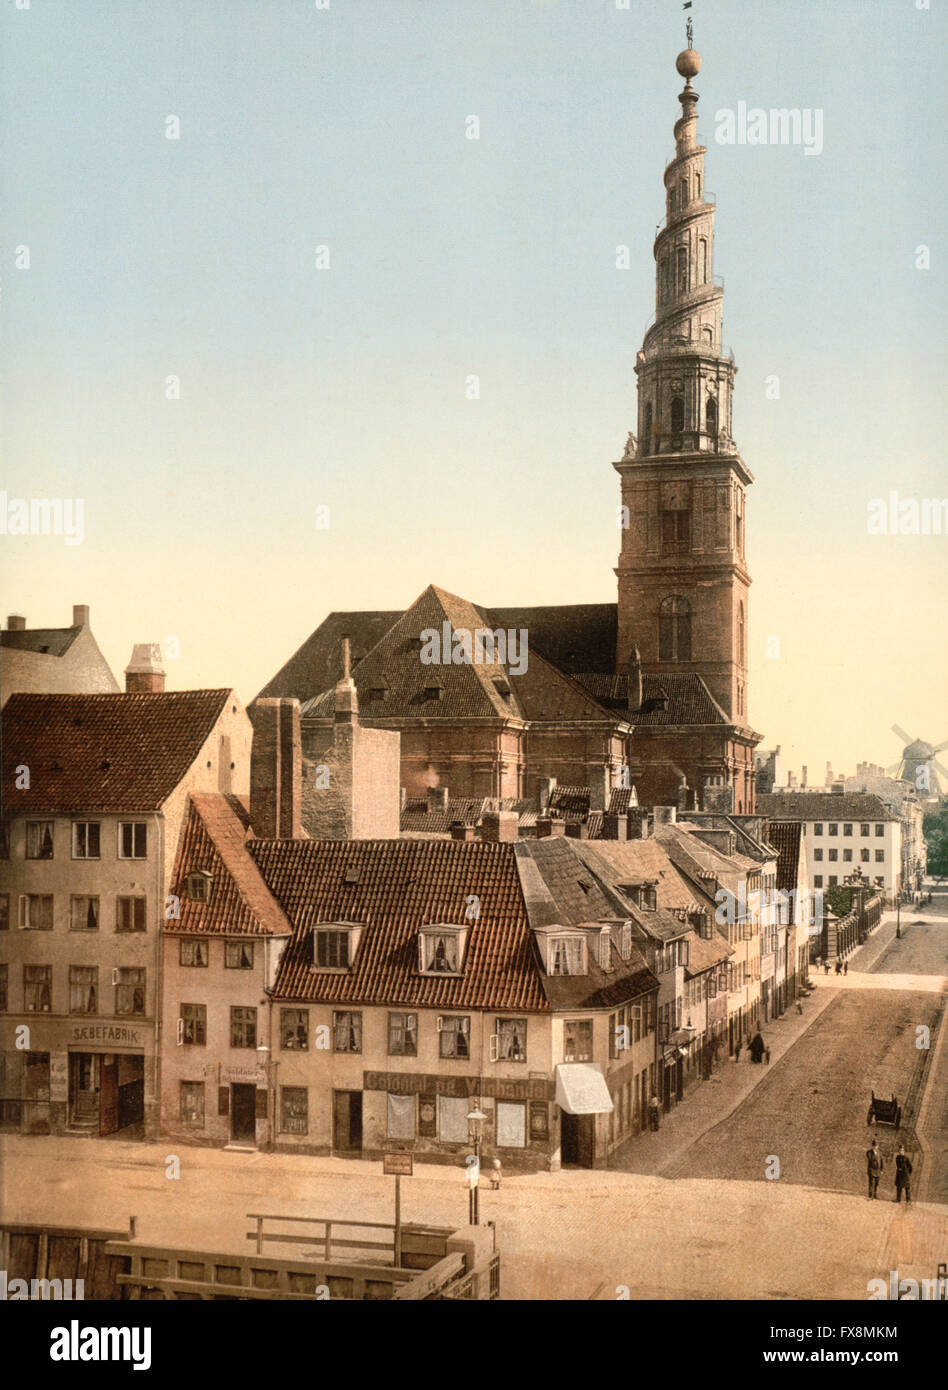 Erlöser-Kirche, Kopenhagen, Dänemark, Photochrome Print, um 1900 Stockfoto